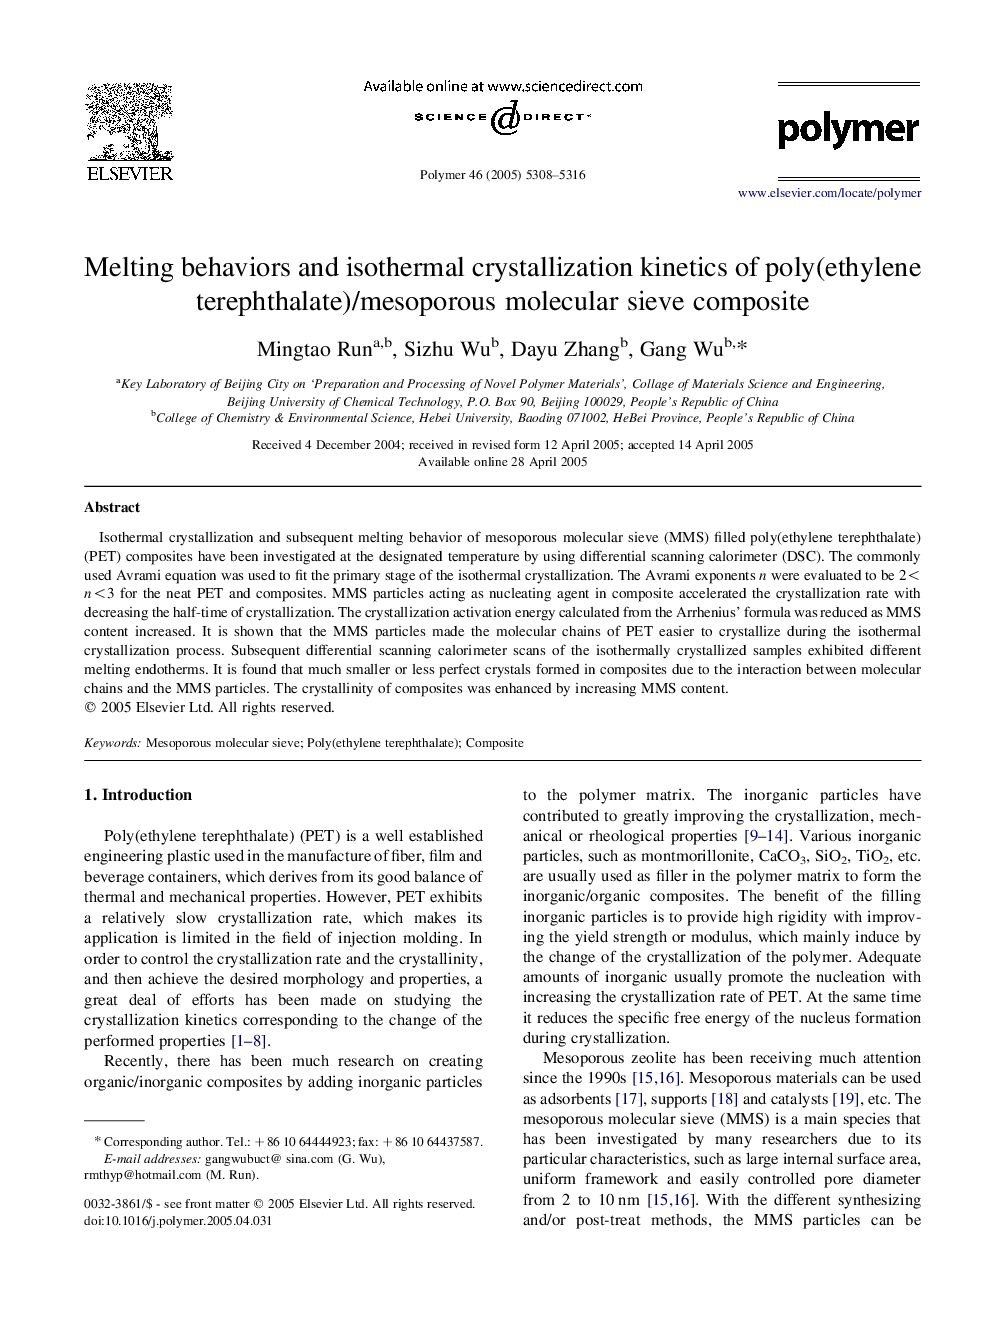 Melting behaviors and isothermal crystallization kinetics of poly(ethylene terephthalate)/mesoporous molecular sieve composite